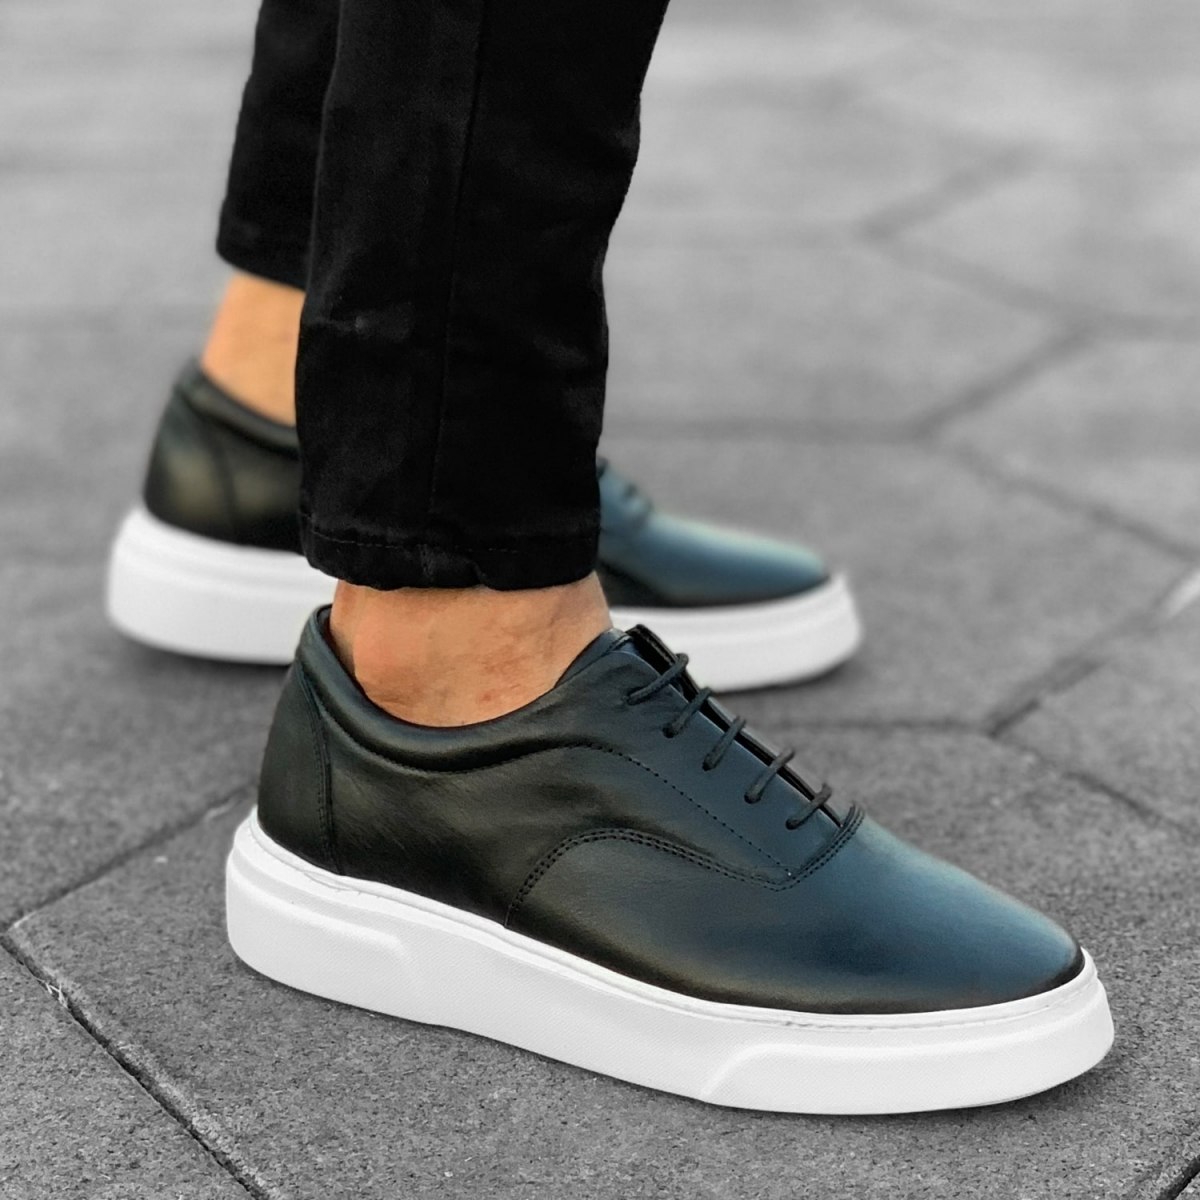 Aap De lucht Sympton Martin Valen Men's Premium Genuine Leather Sneakers Black & White